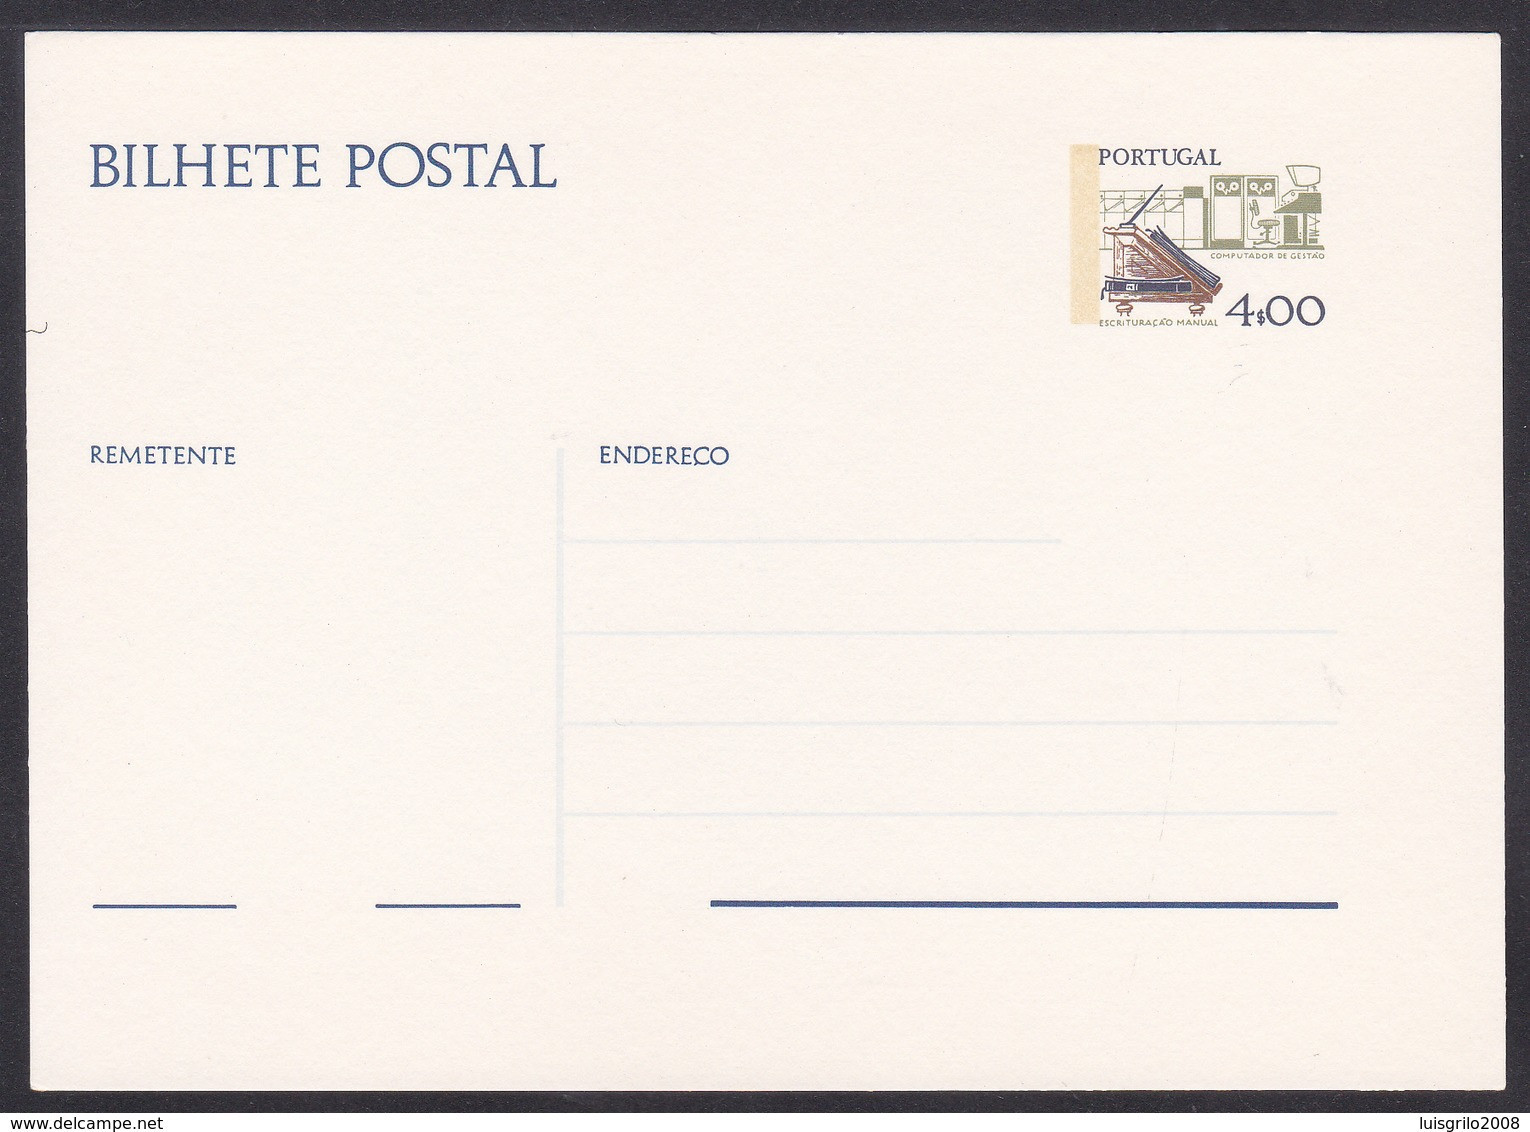 Postal Stationery/ Bilhete Postal Portugal - Instrumentos De Trabalho 4$00 - Ganzsachen